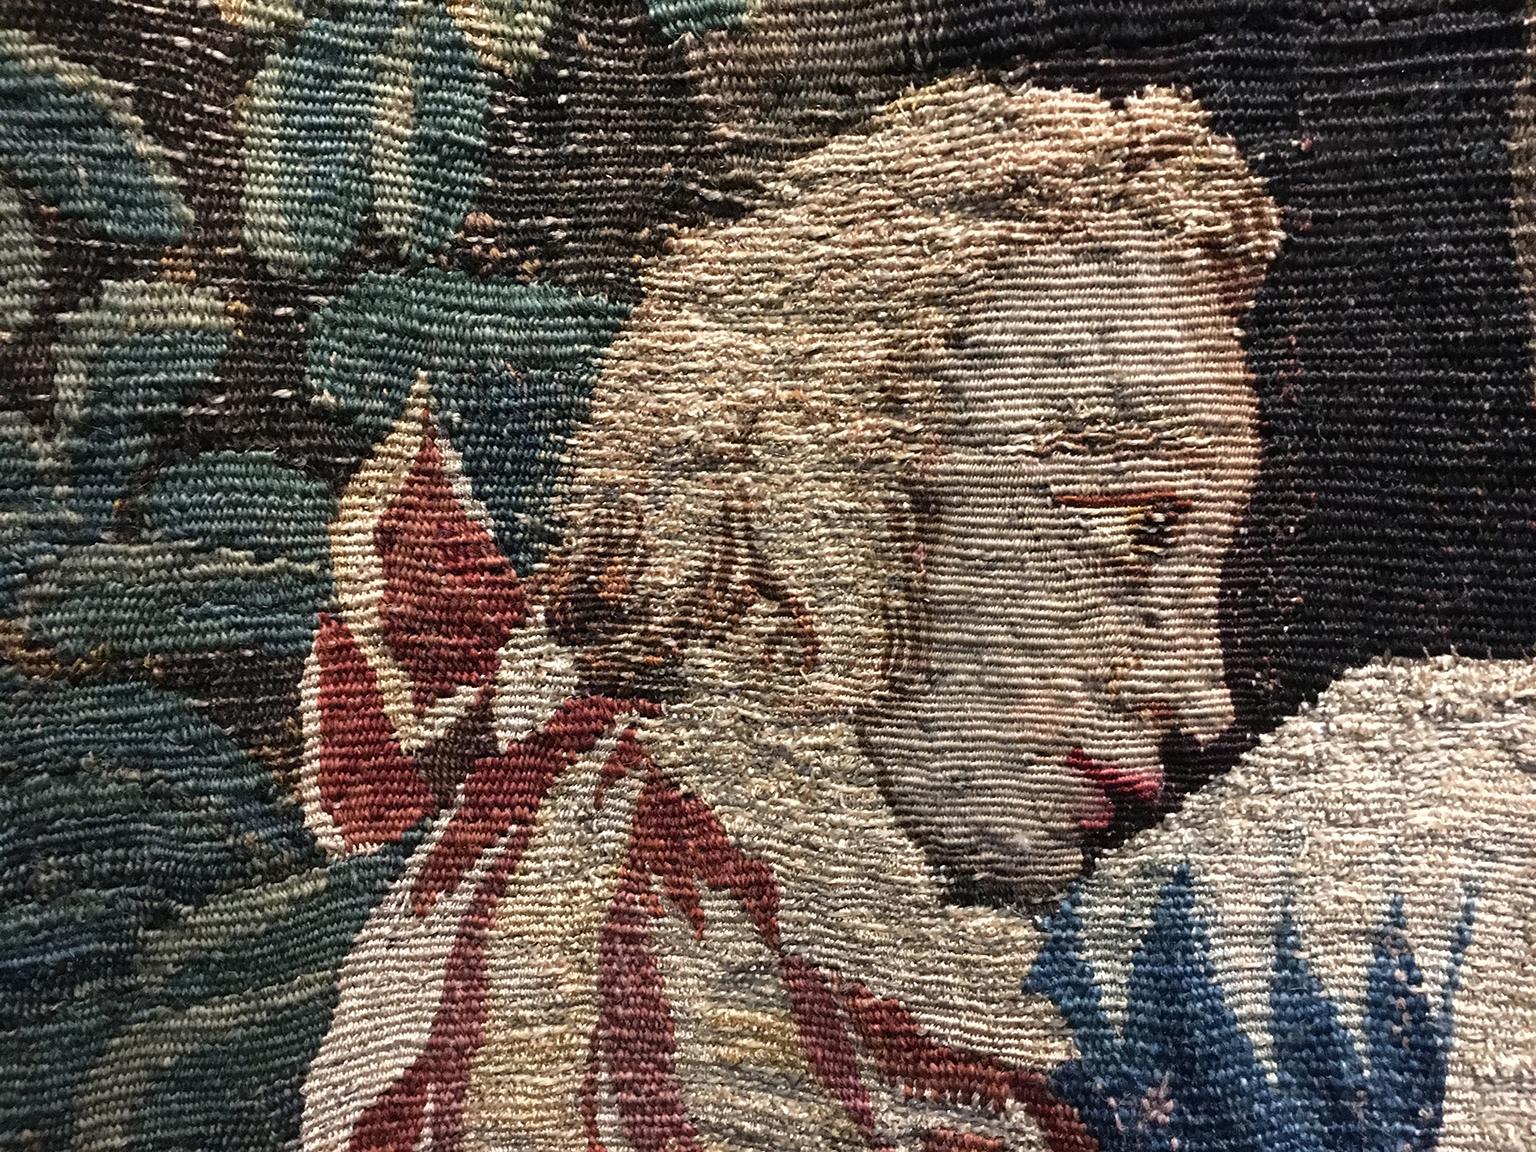 18th century tapestry